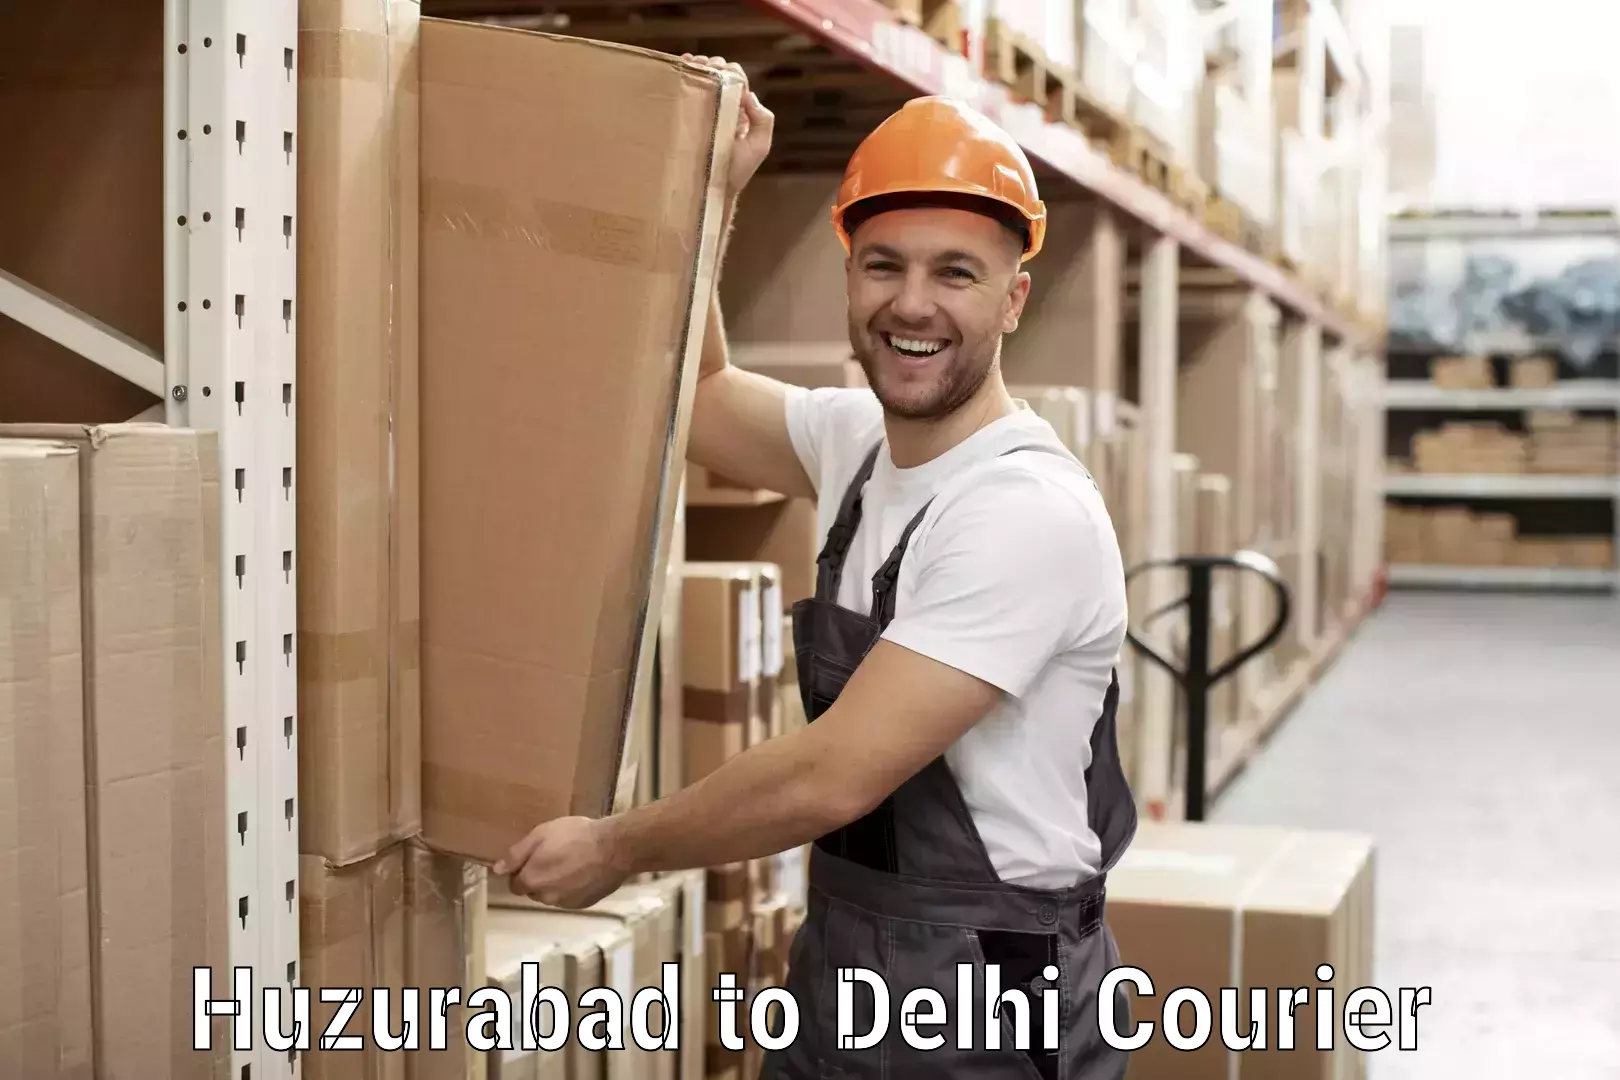 User-friendly delivery service Huzurabad to Ashok Vihar